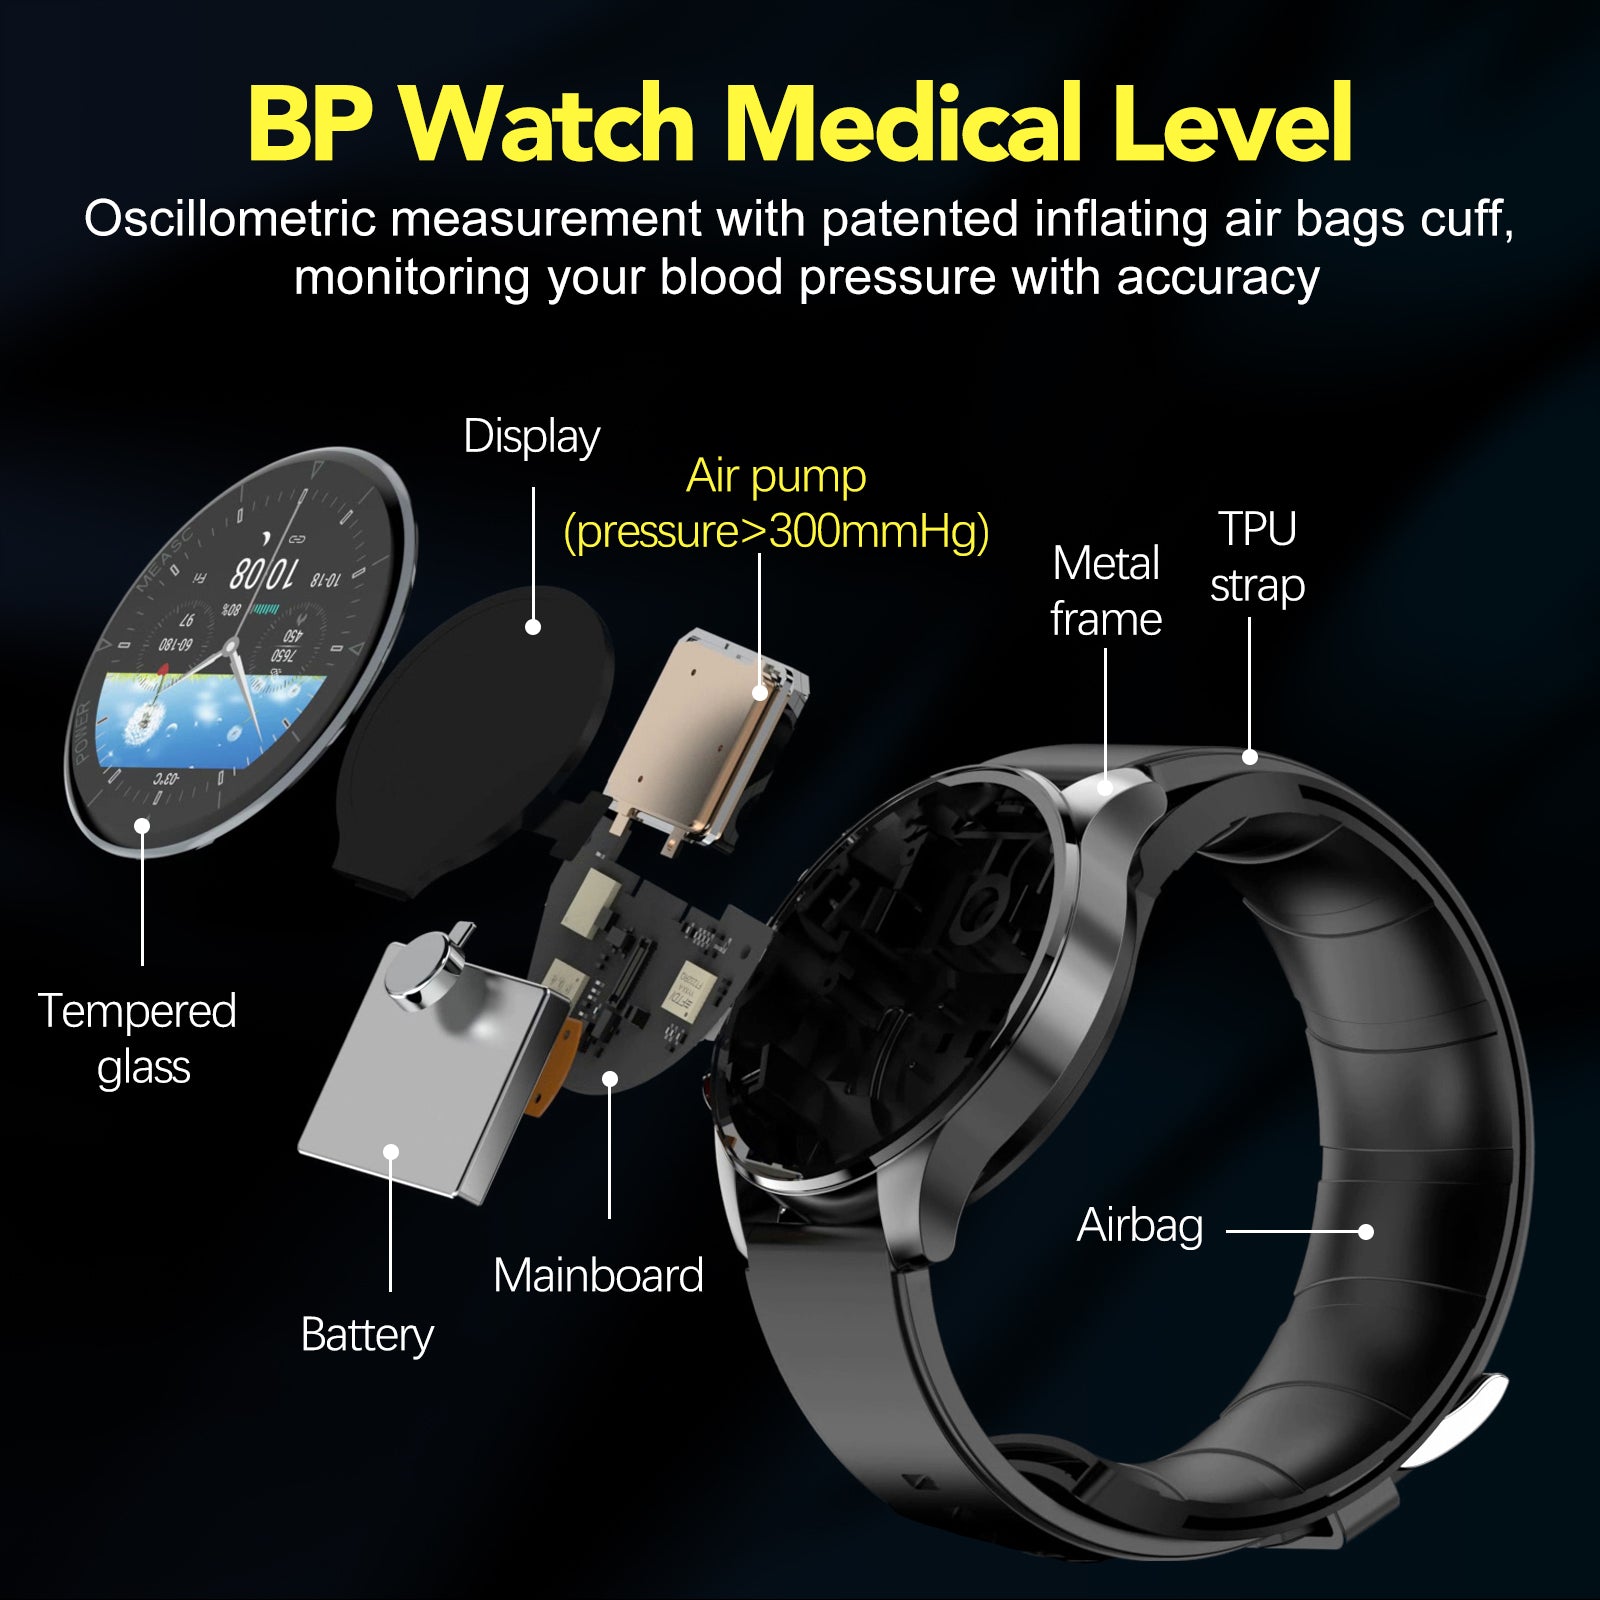 RR Sports® Smart Life (Intelligent air pump Blood pressure health smart watch)